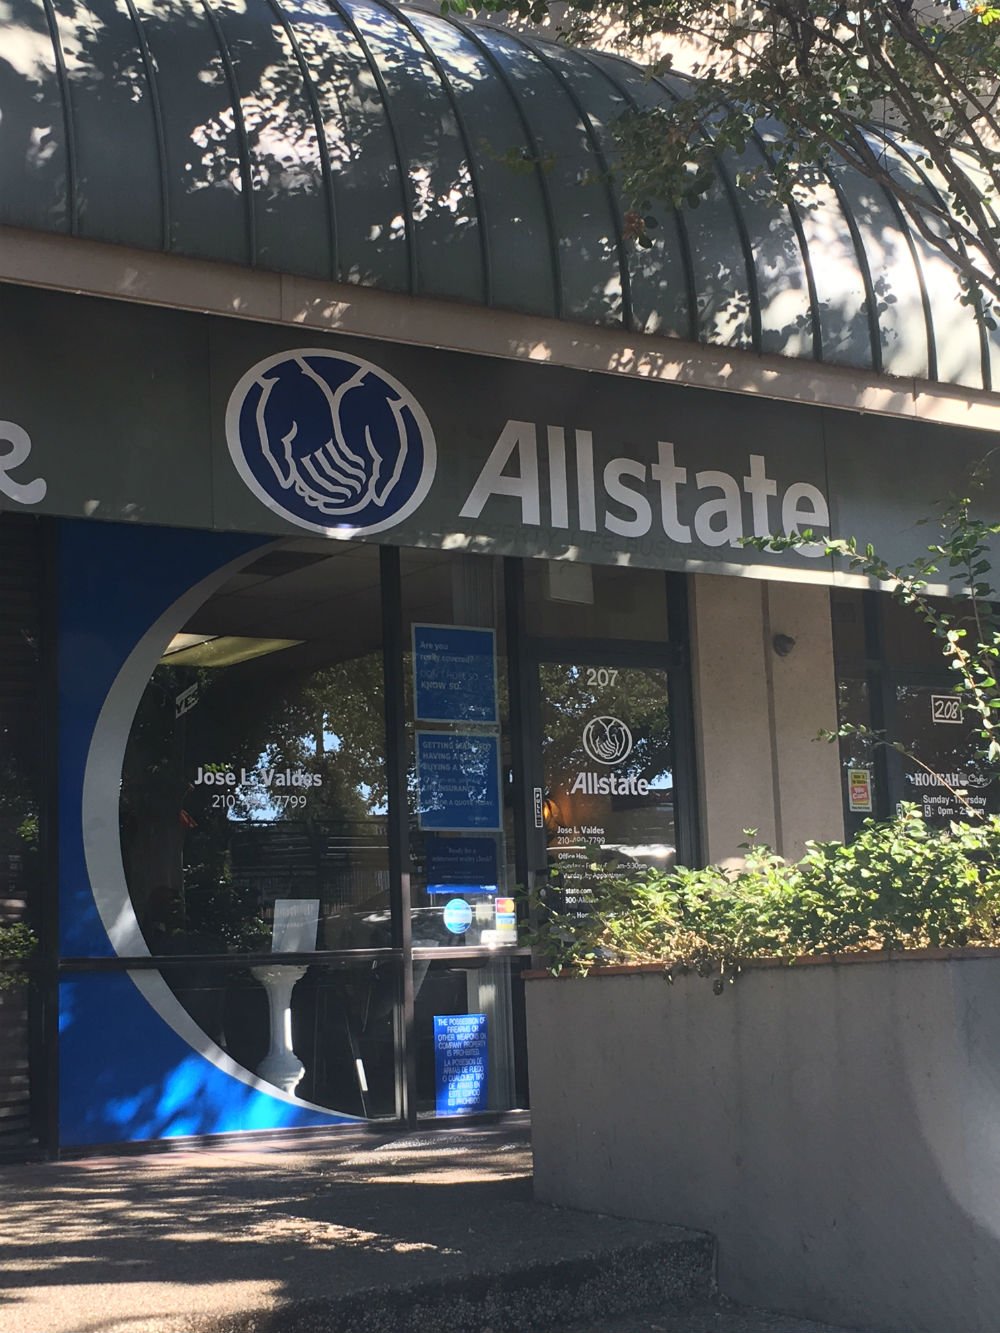 Allstate | Car Insurance in San Antonio, TX - Jose Luis Valdes